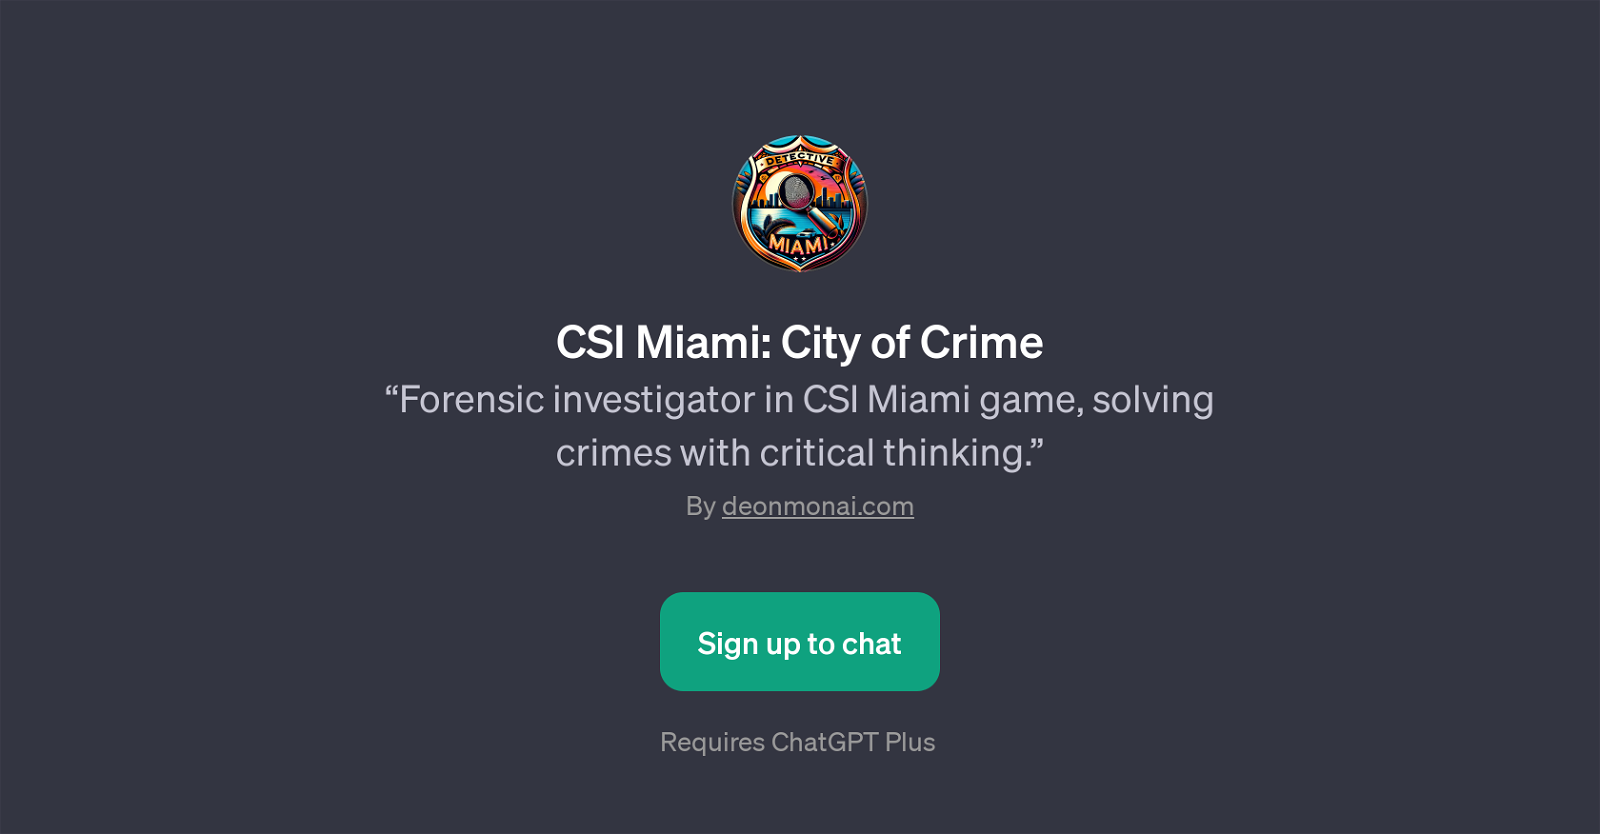 CSI Miami: City of Crime website